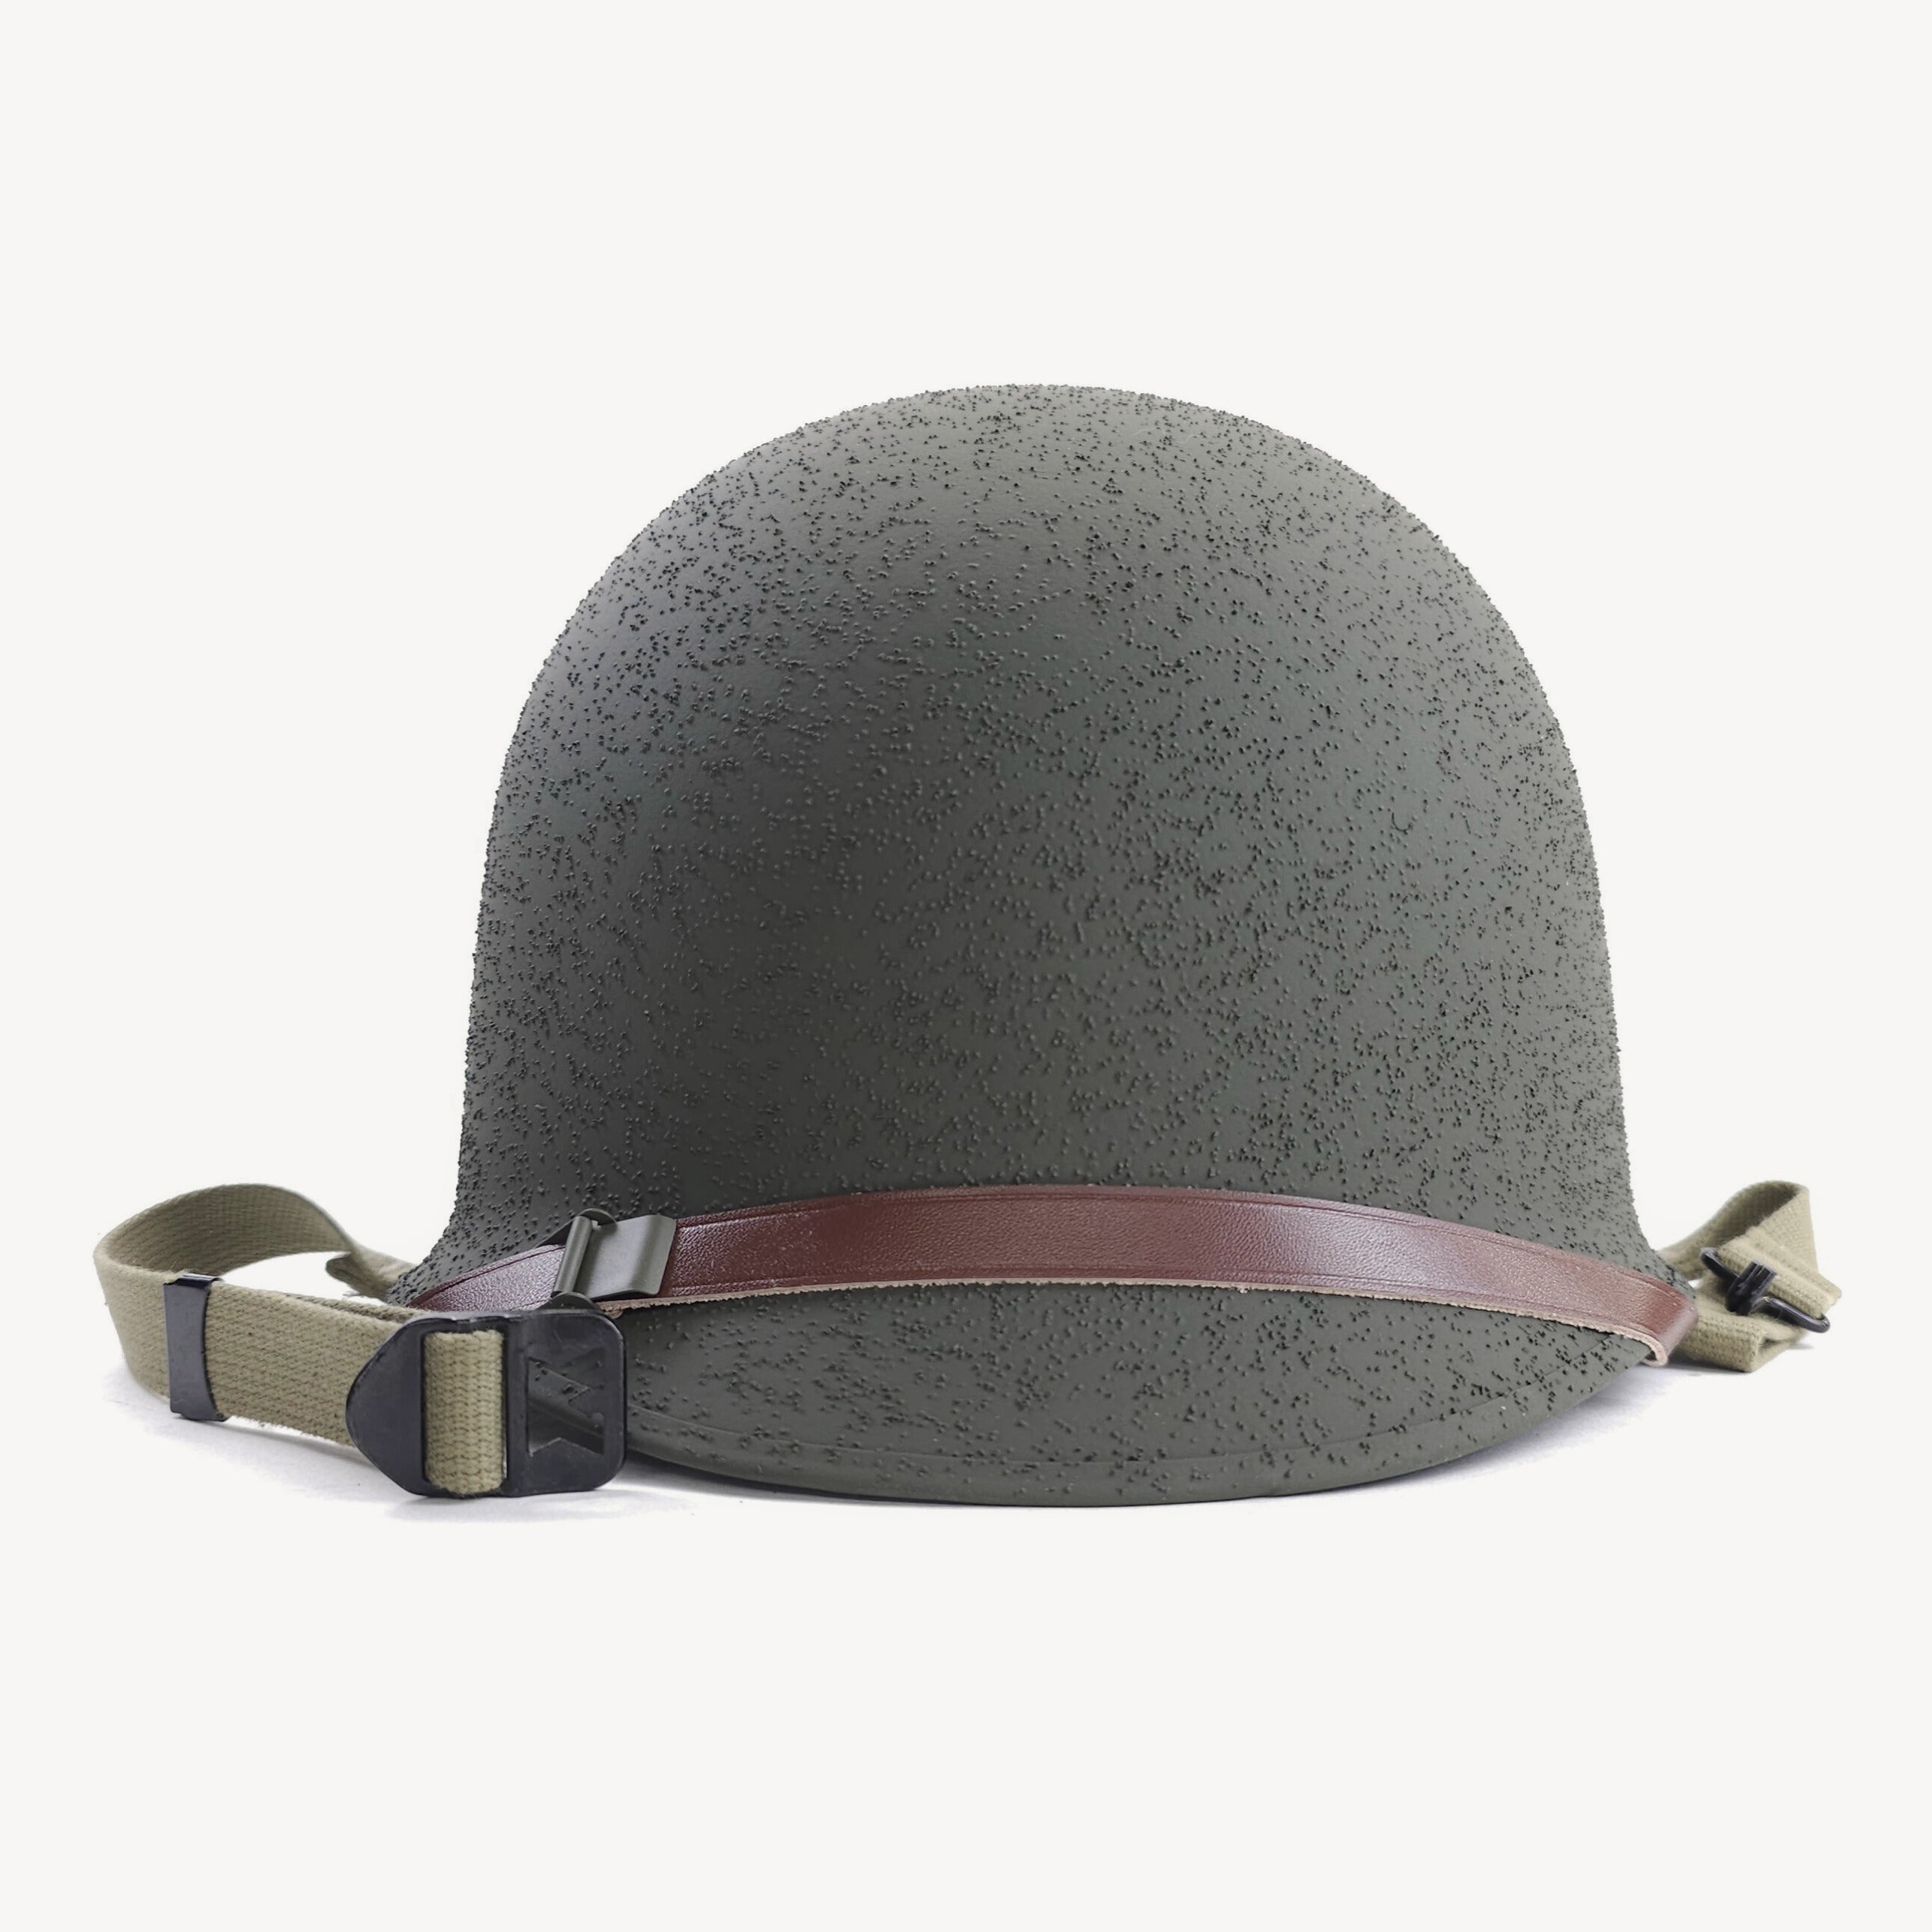 Euro Clone Helmet - Early War - Infantry